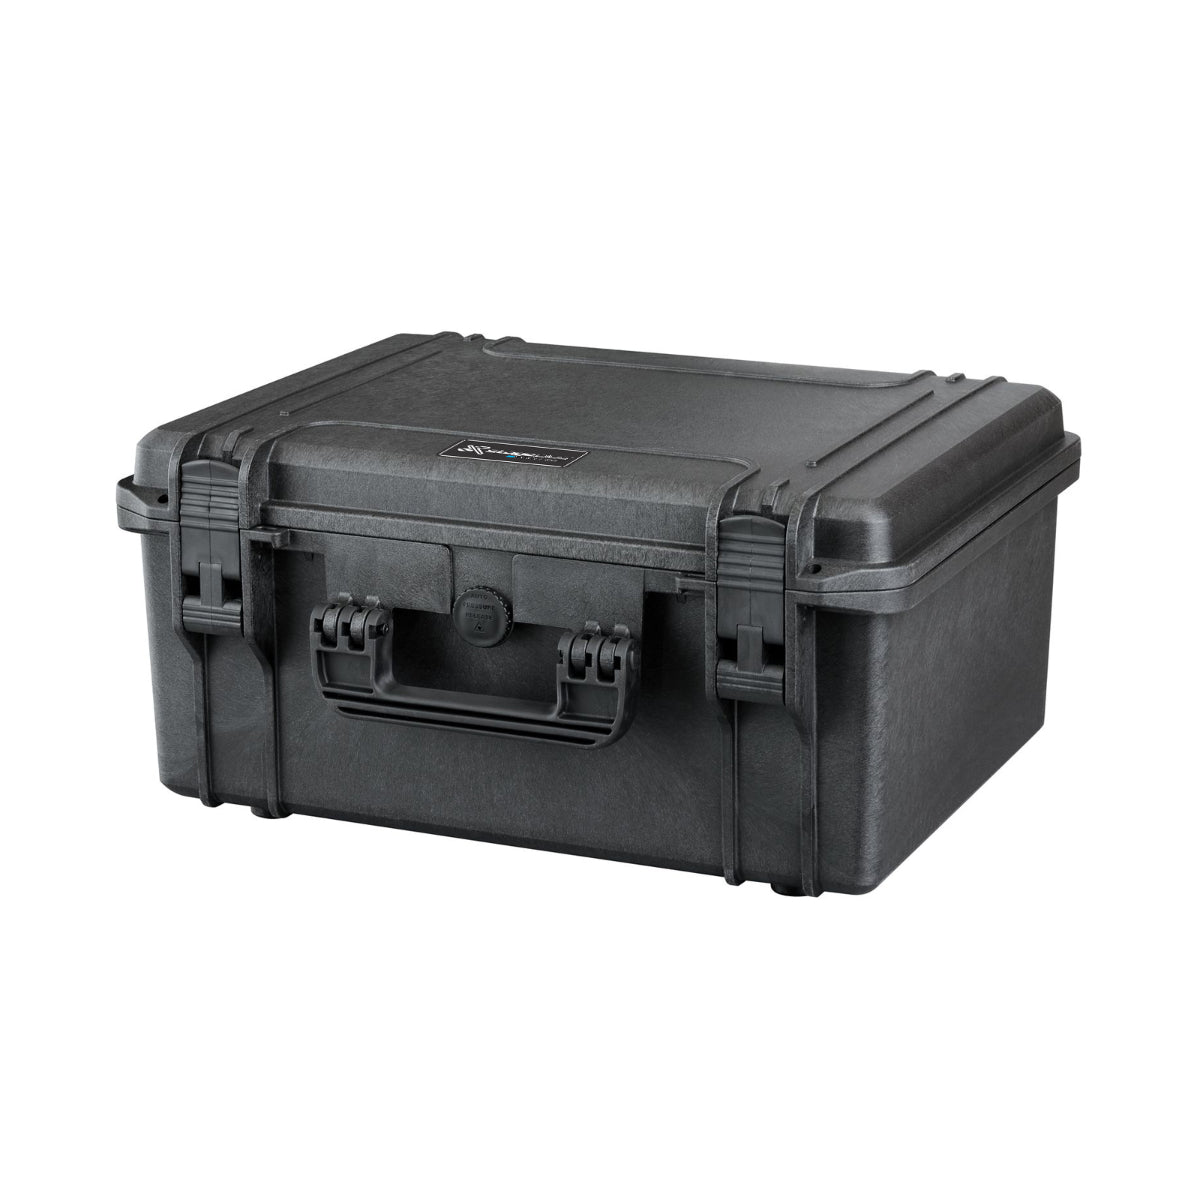 SP PRO 465H220 Black Carry Case, Empty w/ Convoluted Foam in Lid, ID: L465xW335xH220mm